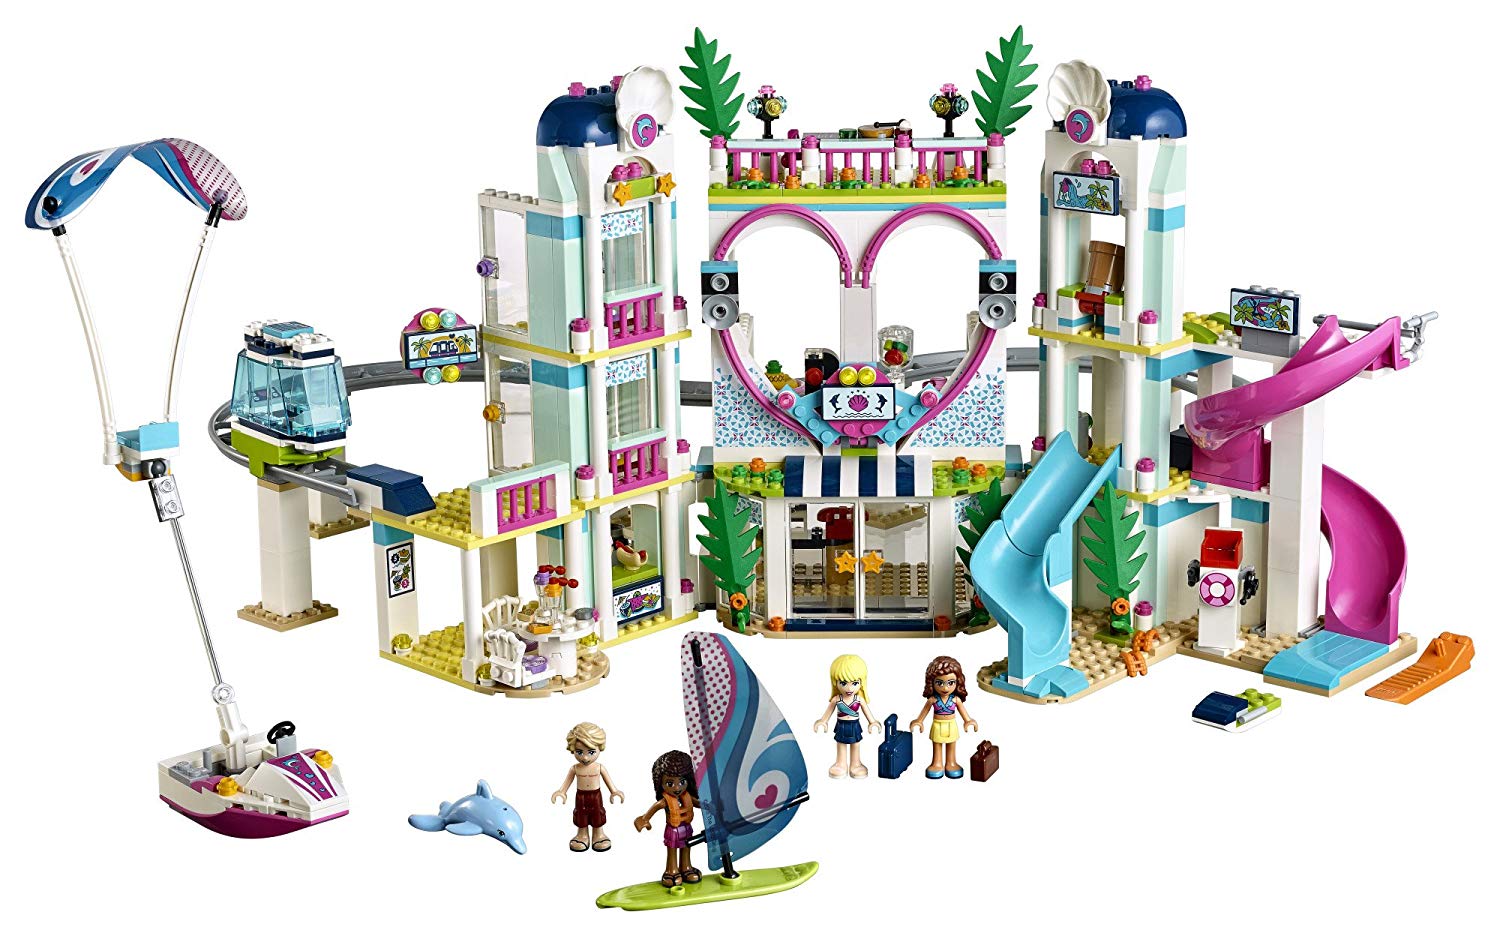 LEGO Friends: Heartlake City Resort Building Set - 41347